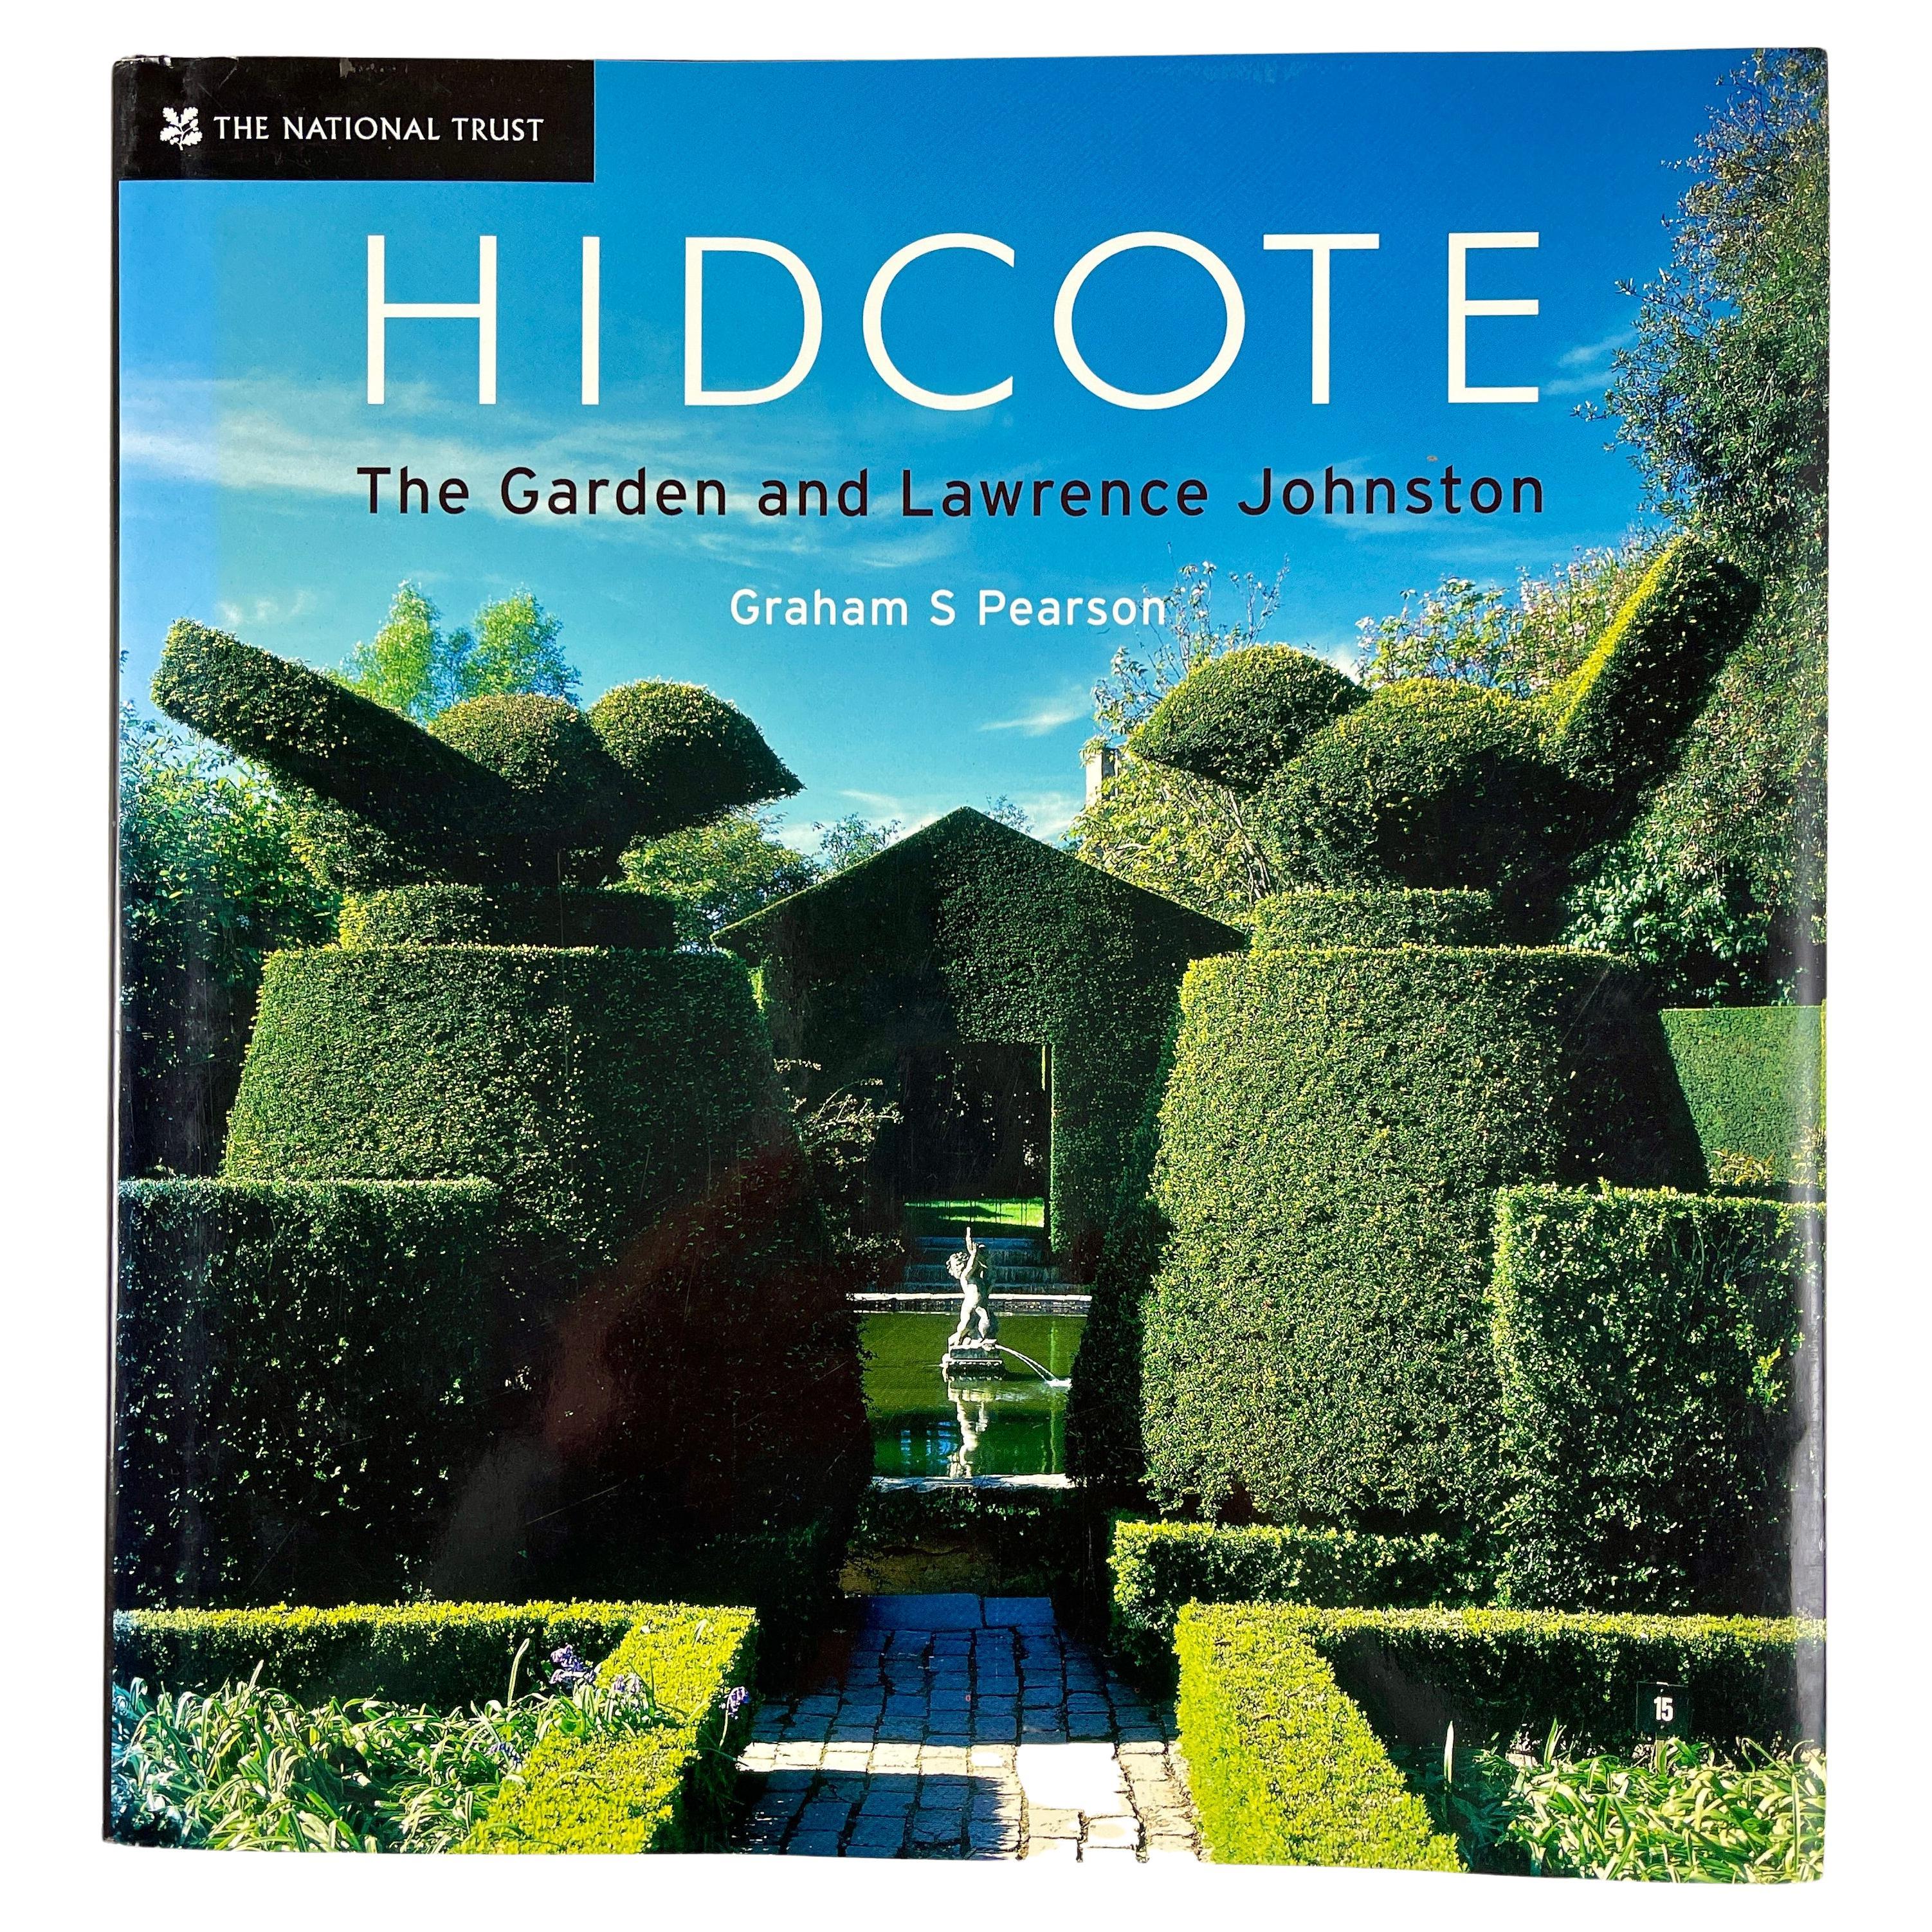 Hidcote the Garden et Lawrence Johnston, Livre du National Trust en vente